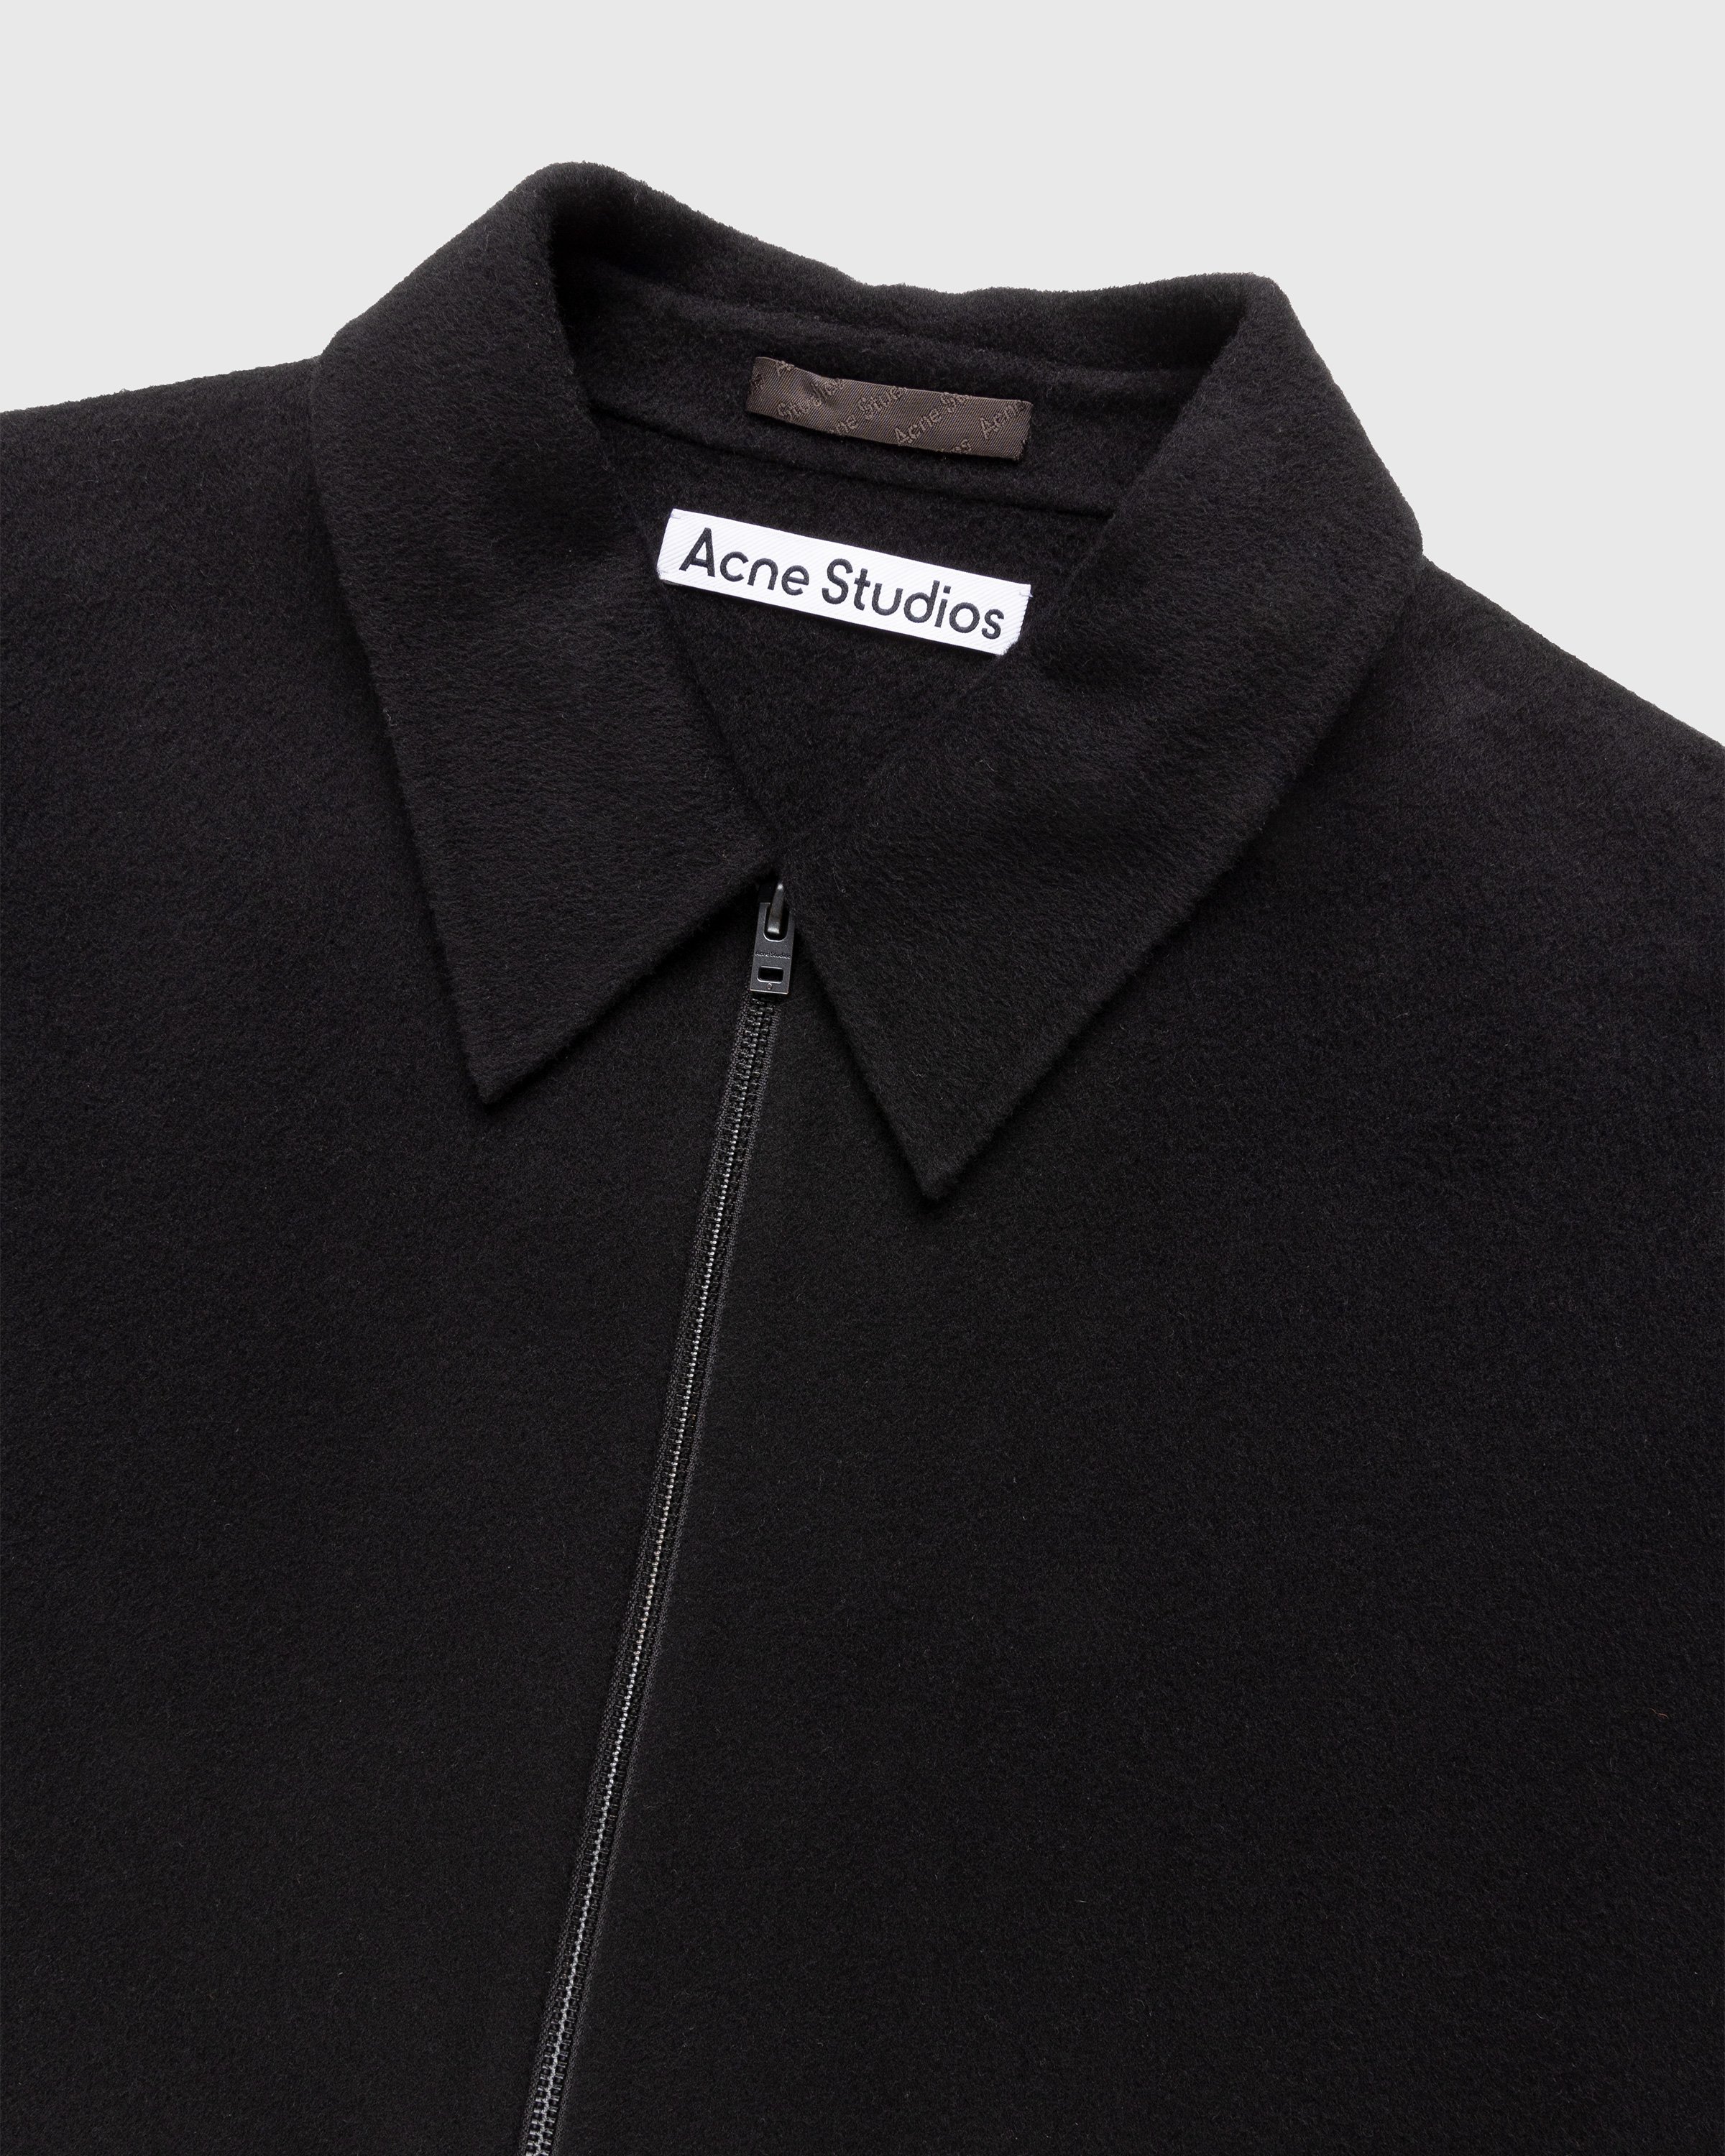 Acne Studios - Wool Zipper Jacket Black - Clothing - Black - Image 3